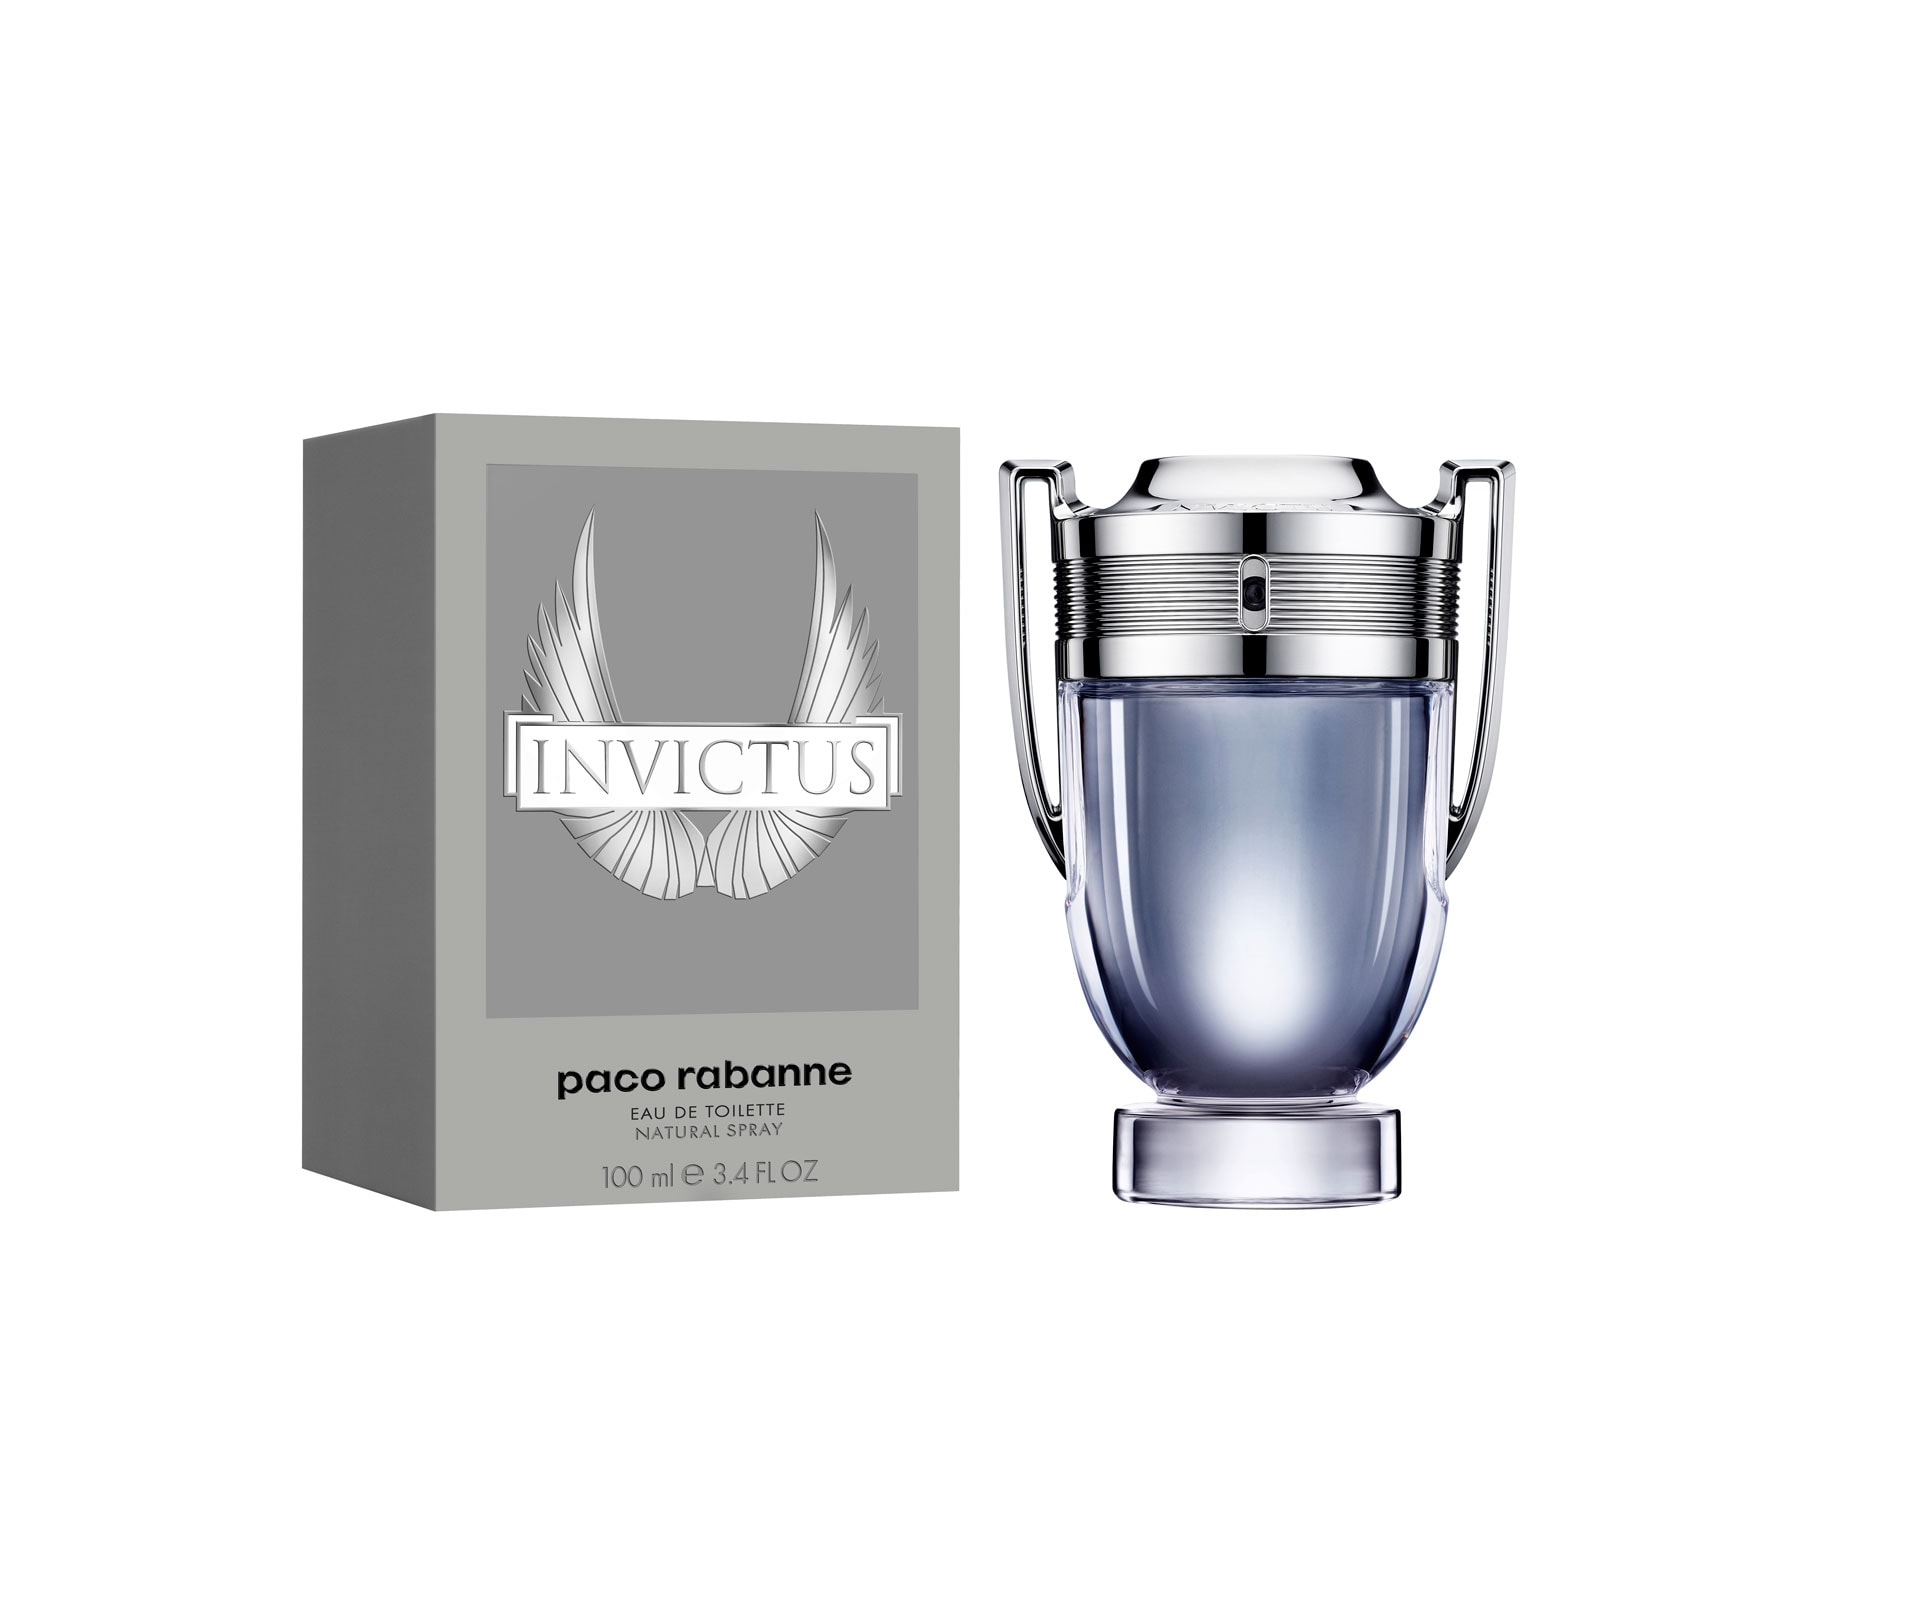 Invictus » Paco Rabanne » The Parfumerie » Sri Lanka